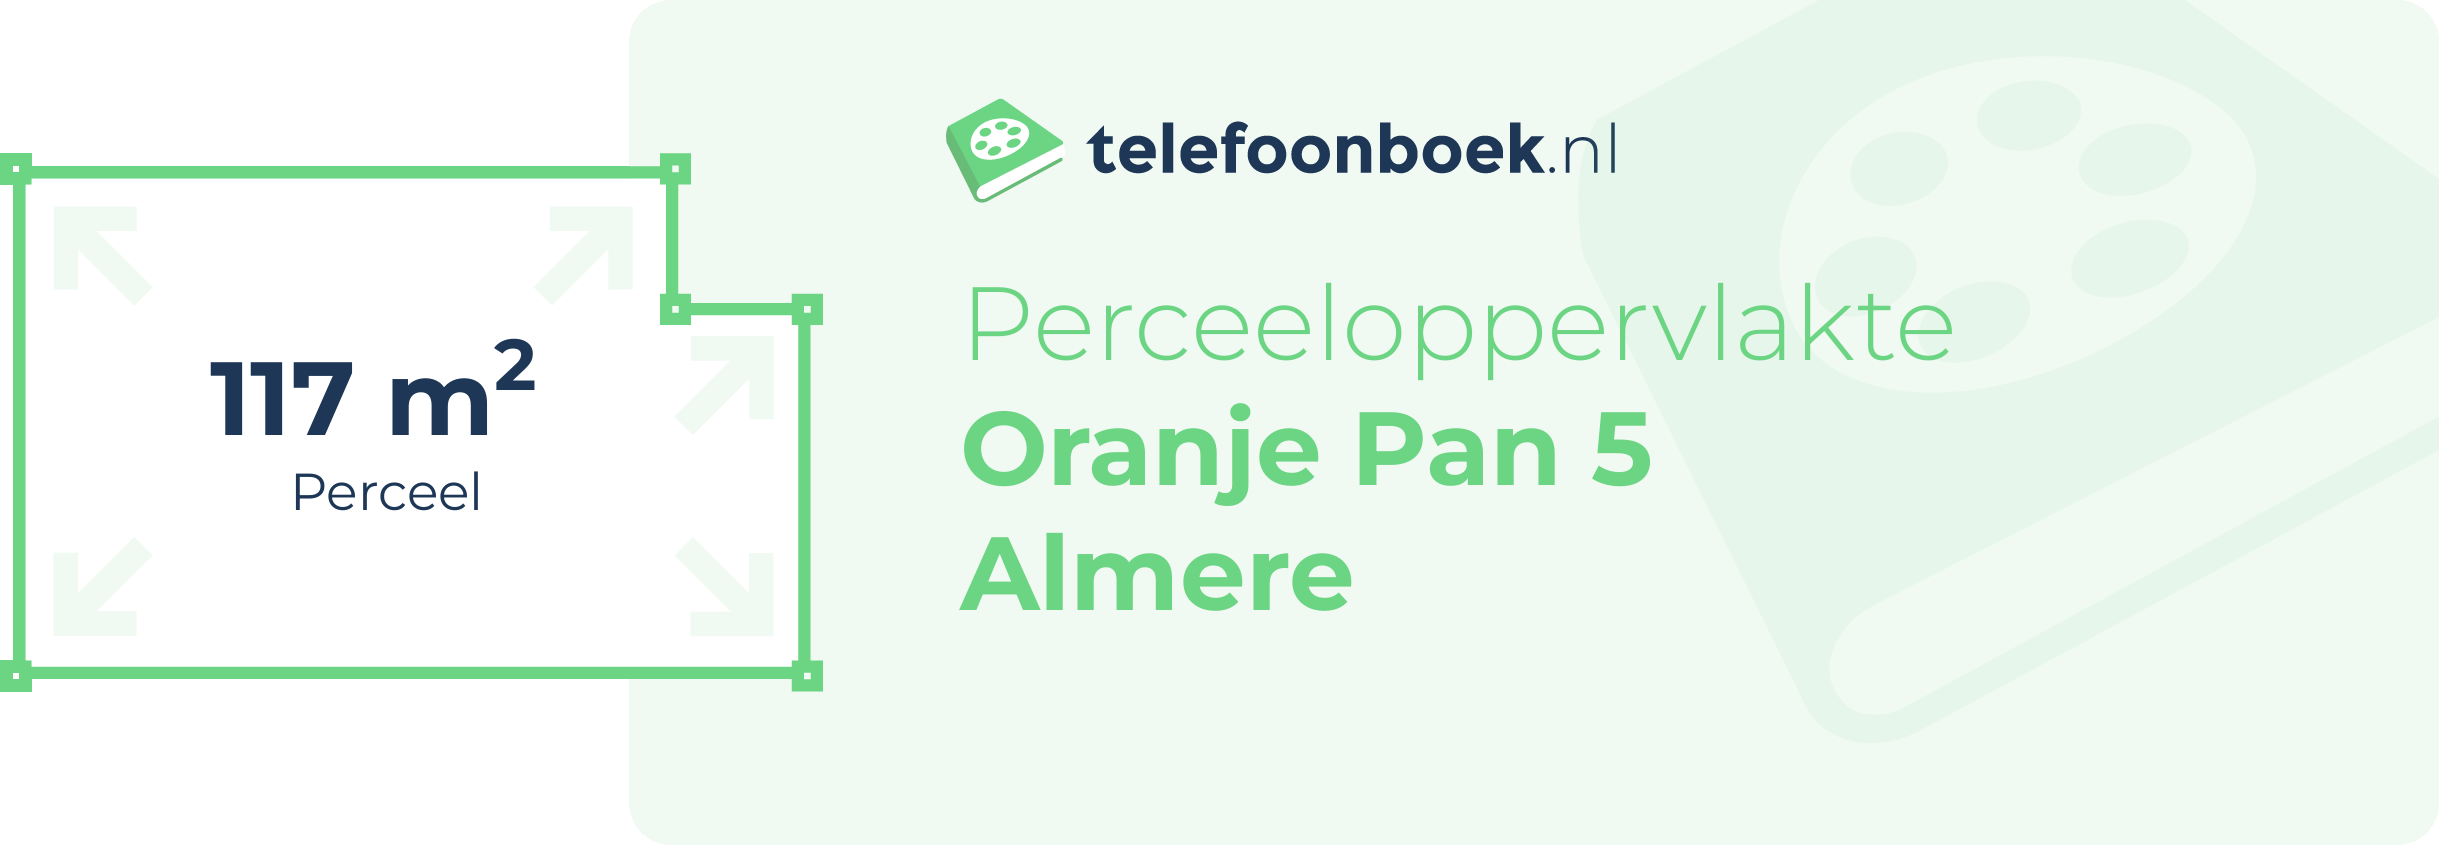 Perceeloppervlakte Oranje Pan 5 Almere